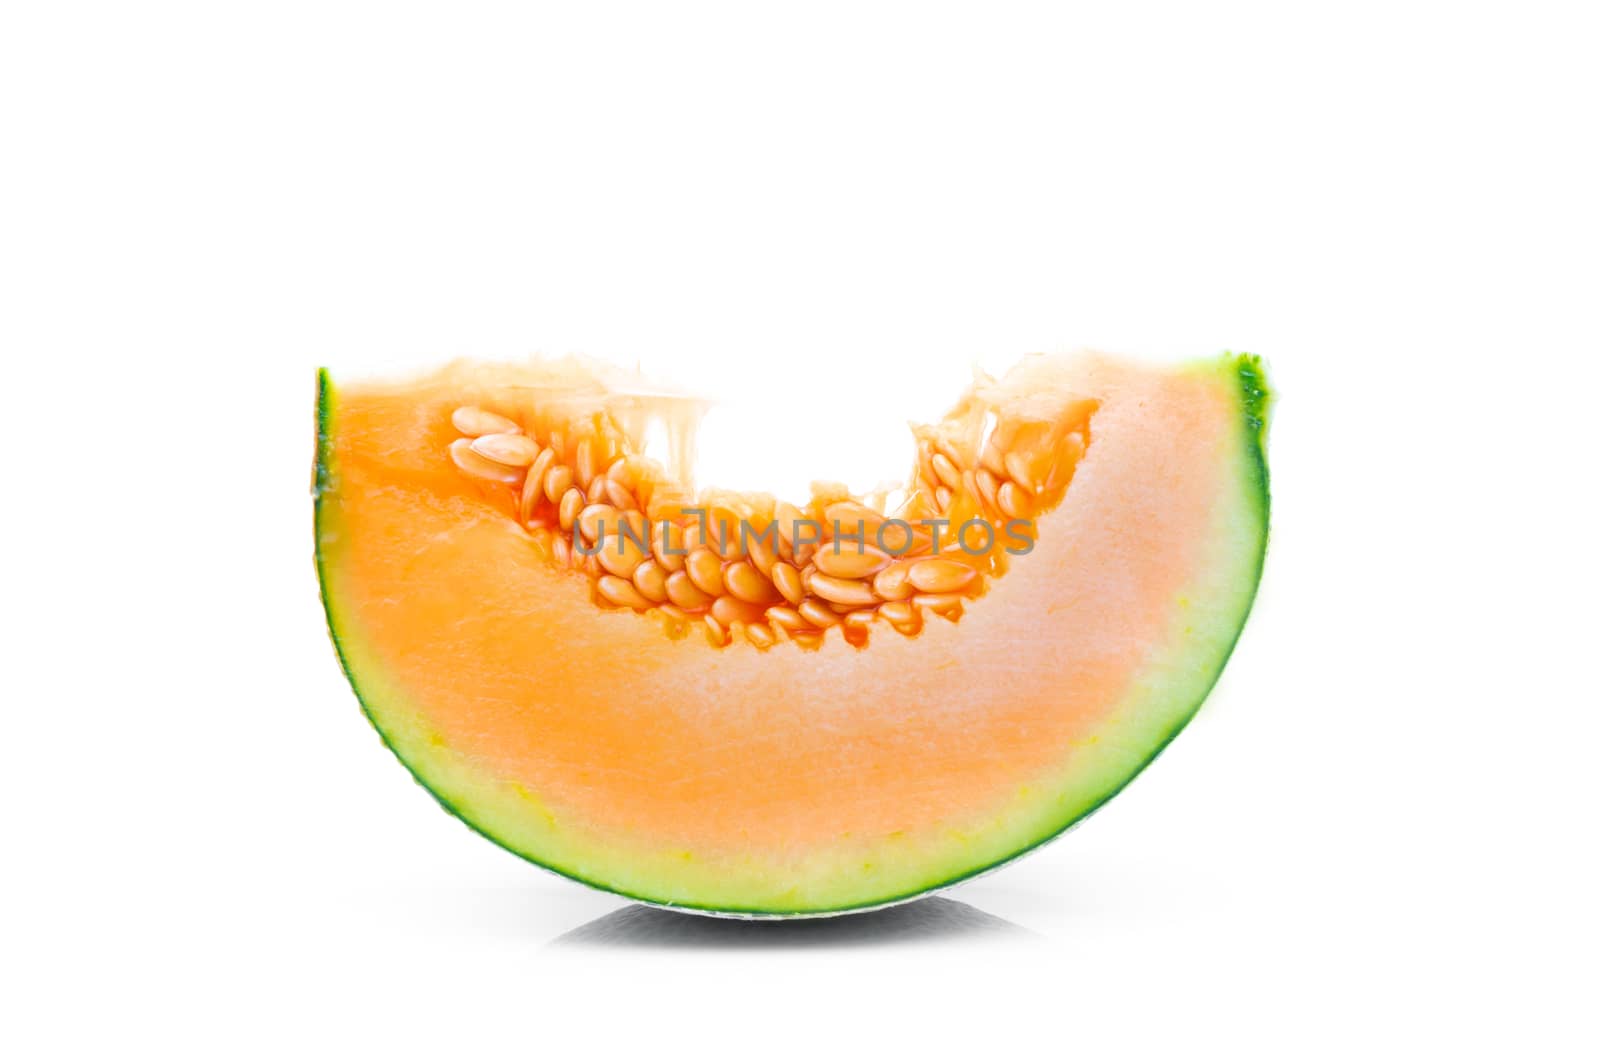 Melon fruit on a white background by sompongtom